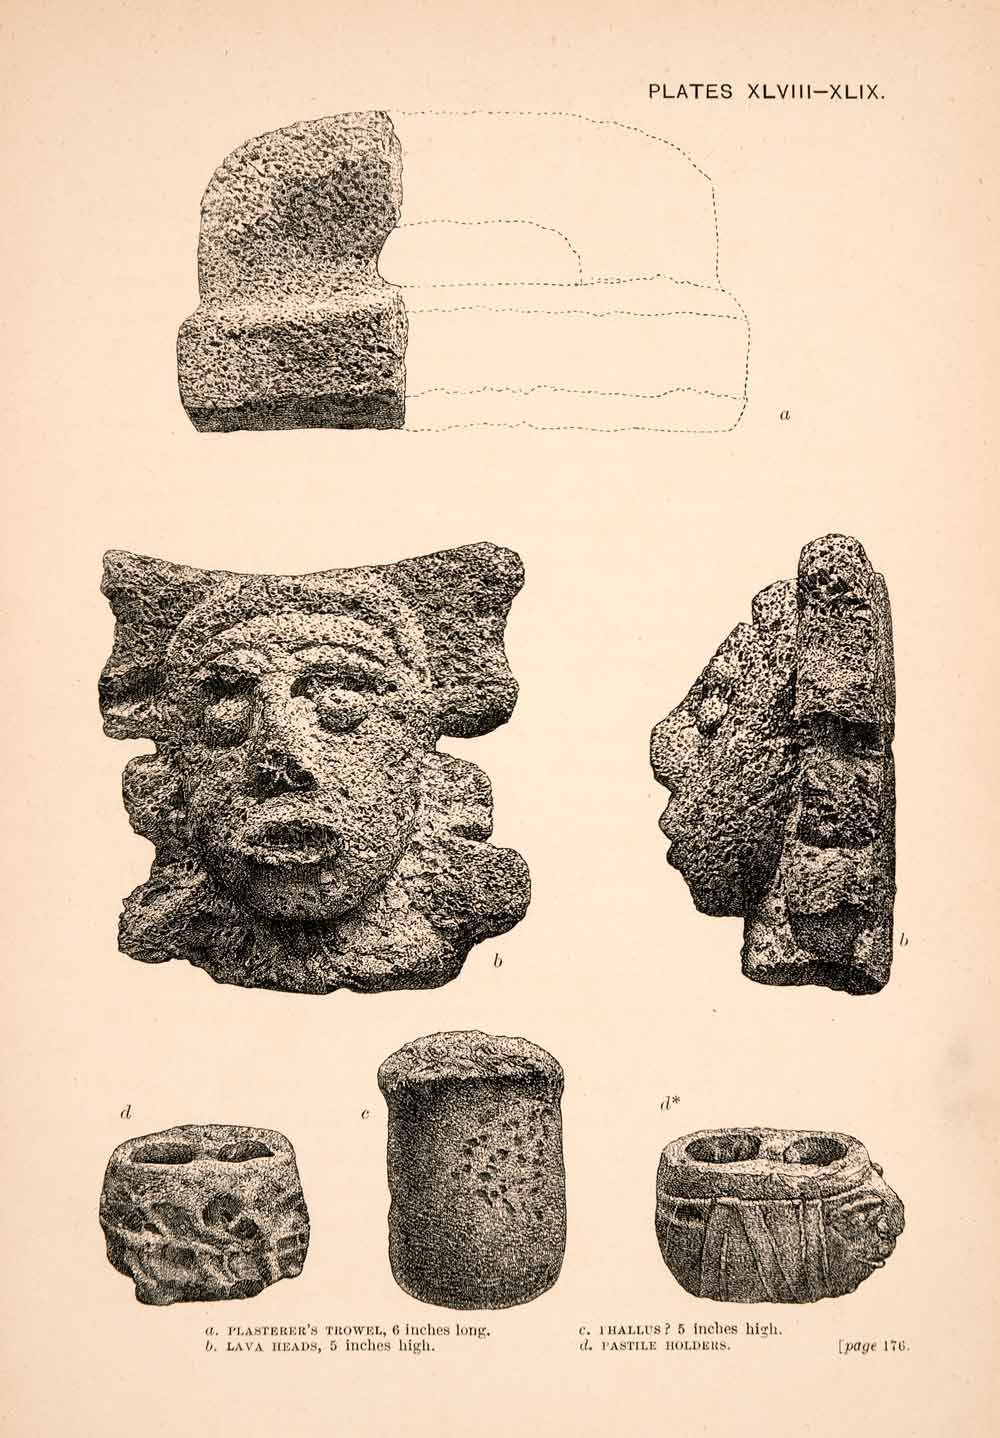 1883 Wood Engraving Lava Heads Trowel Pastile Holders Mexico Thomas XGPA4